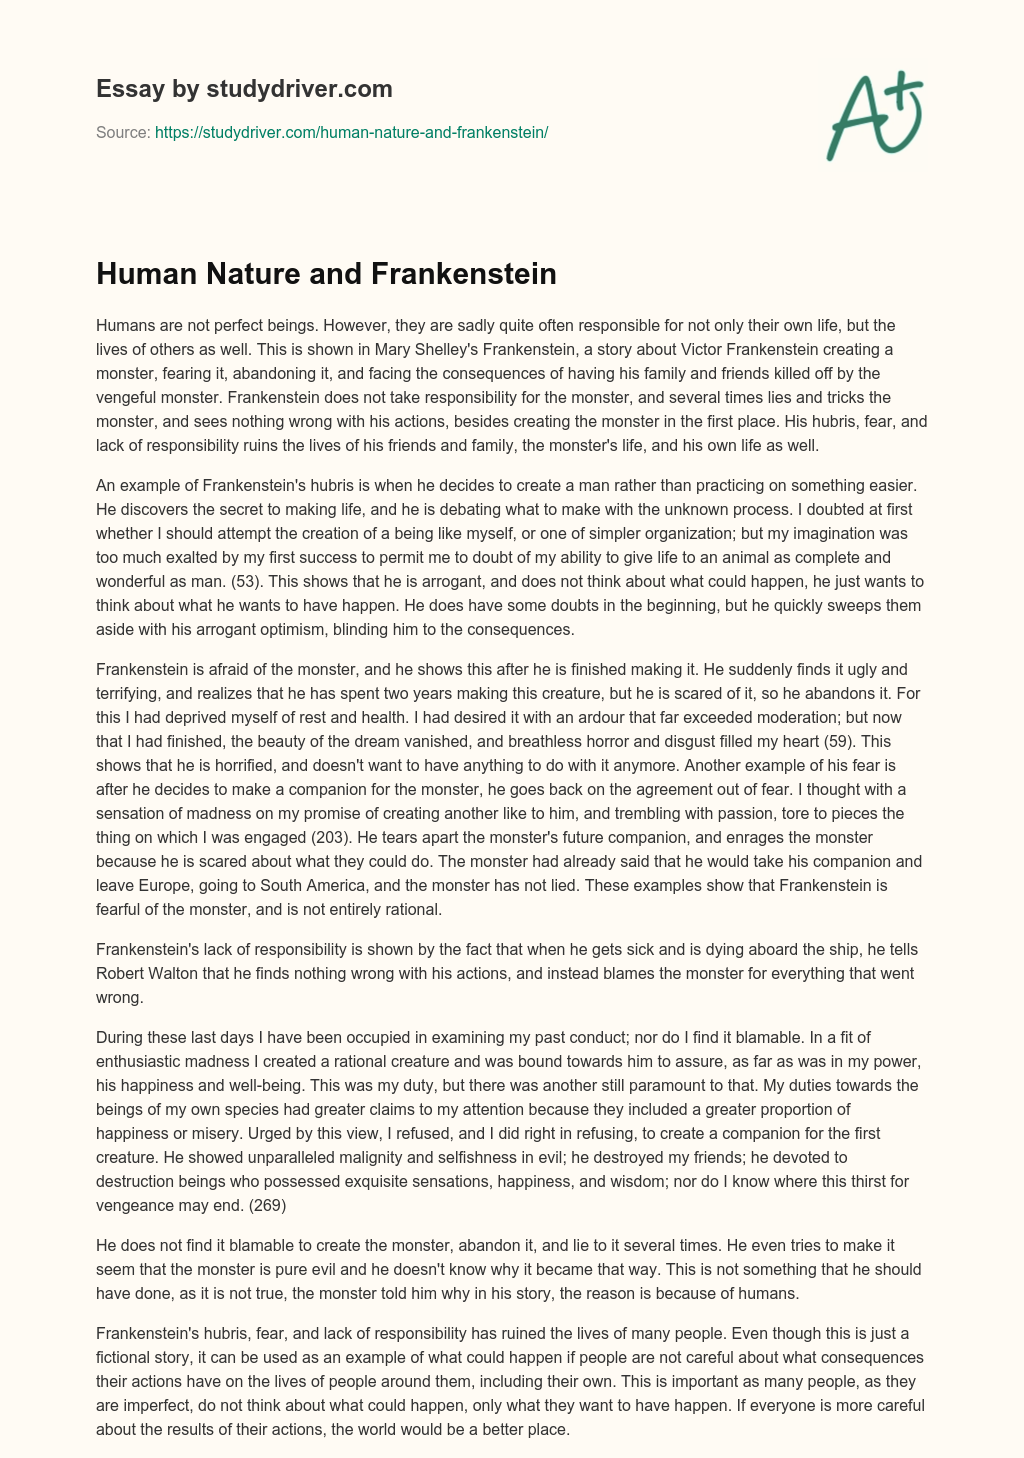 Human Nature and Frankenstein essay